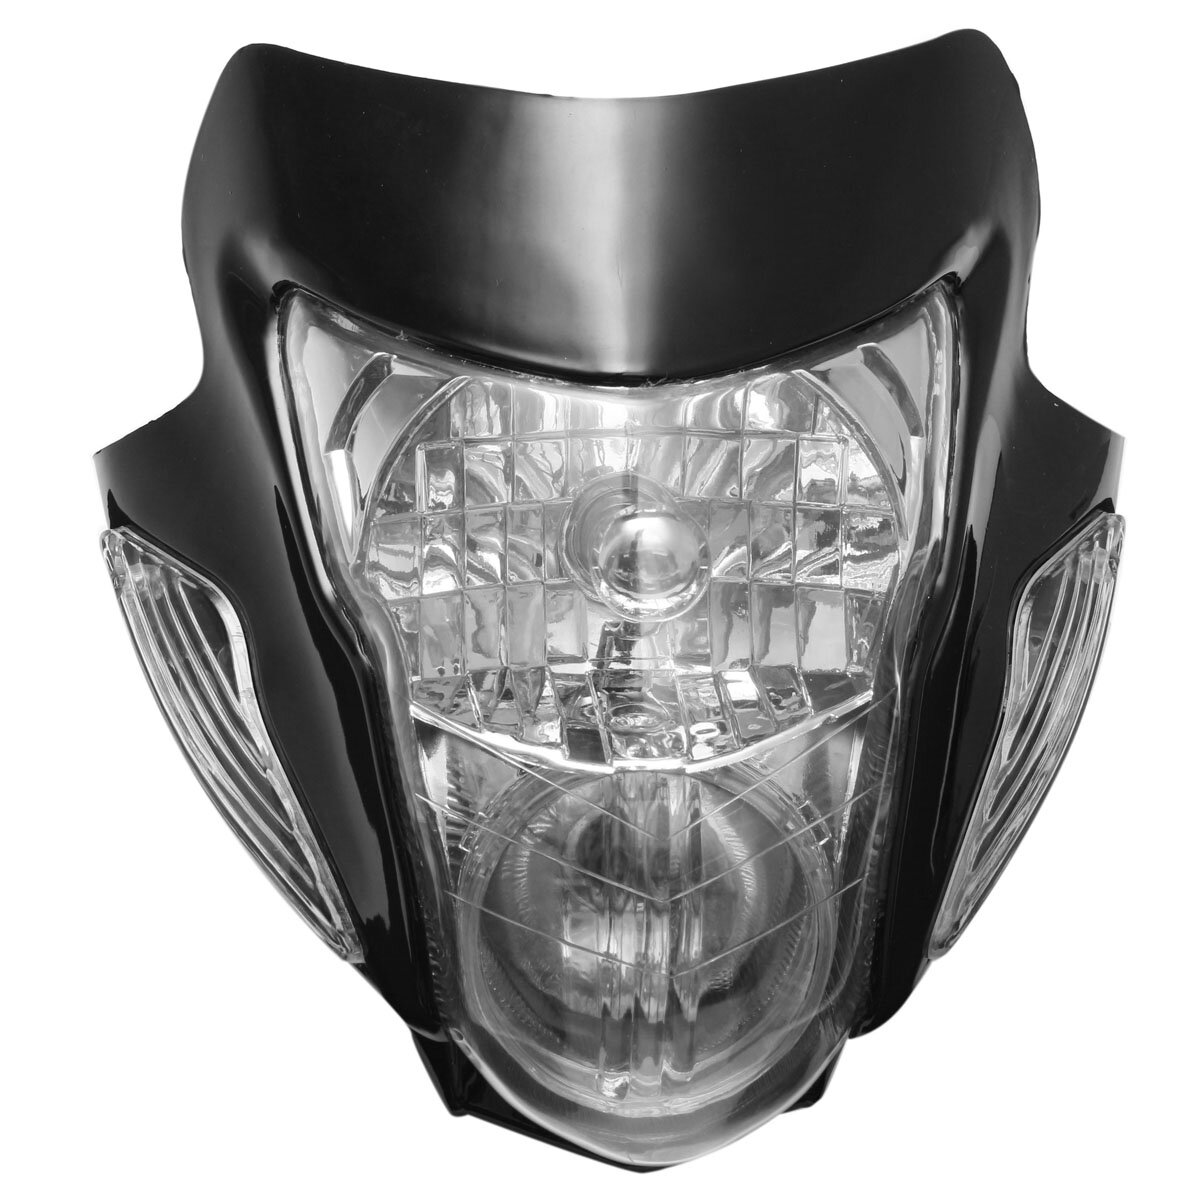 Motor Amber Light Koplamp Lamp Voor Street Fighter Honda Yamaha Suzuki Kawasaki